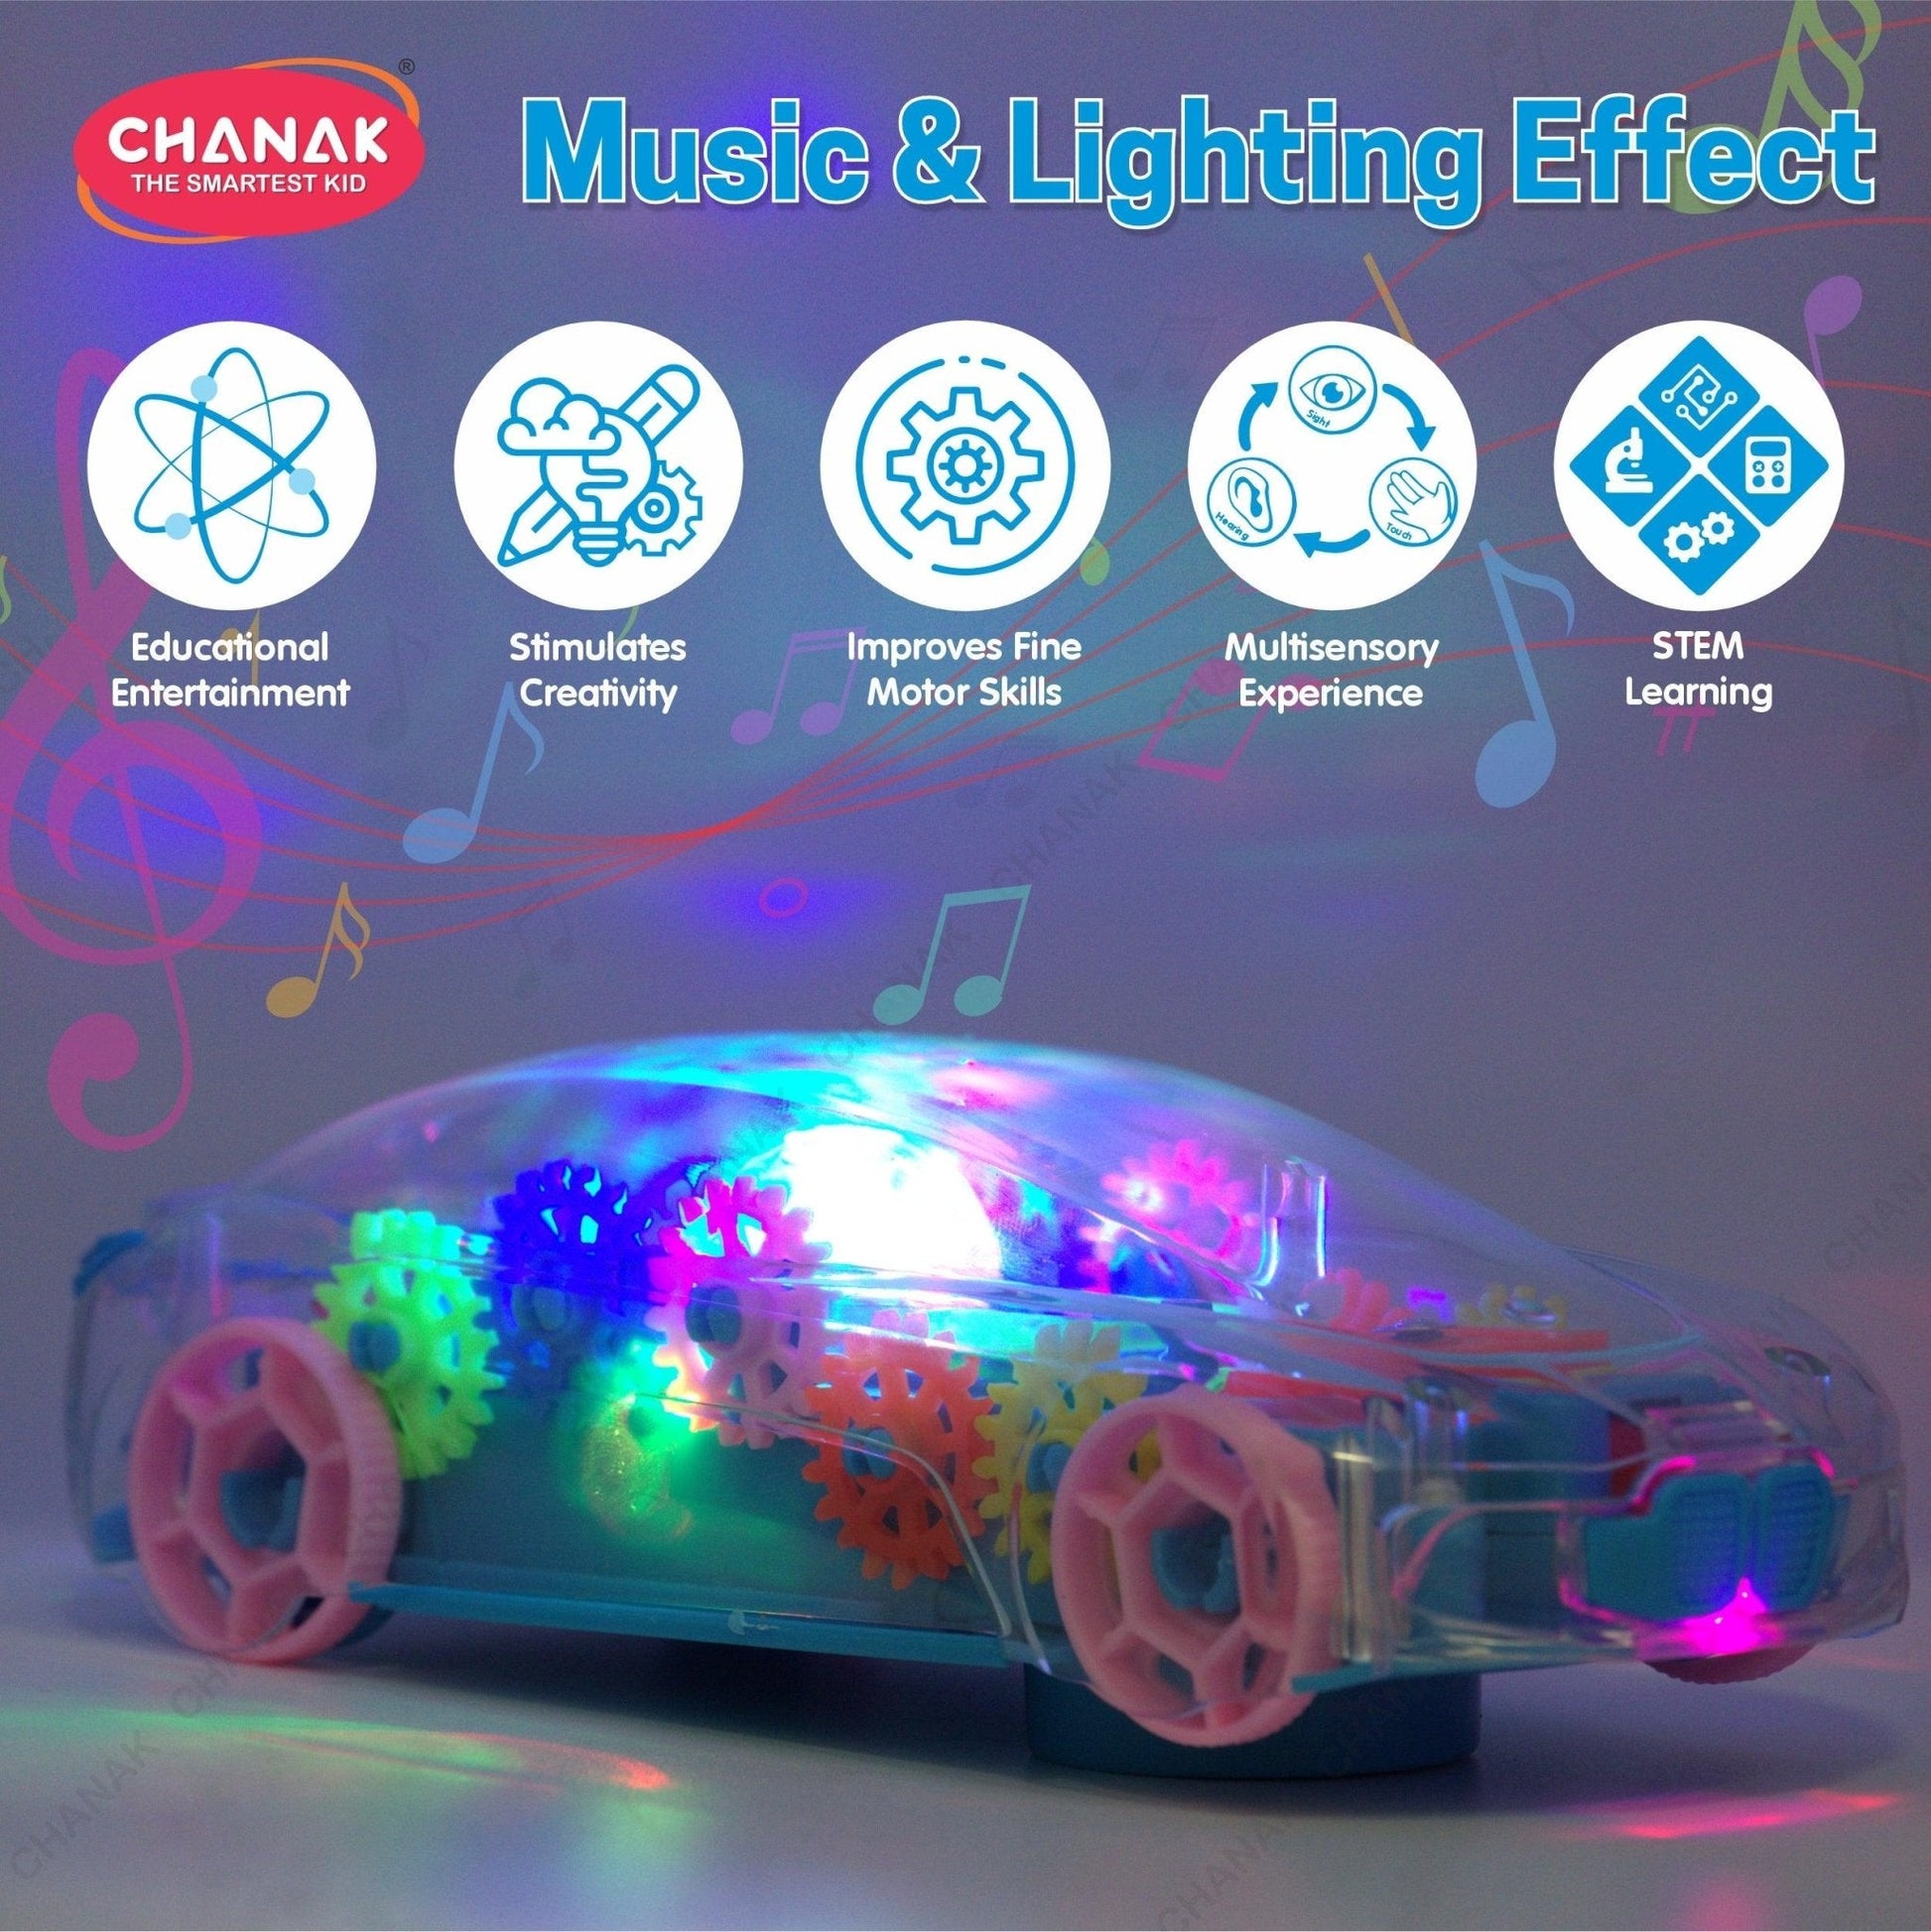 Chanak Transparent 3D Gear Car for Kids (Blue) - chanak